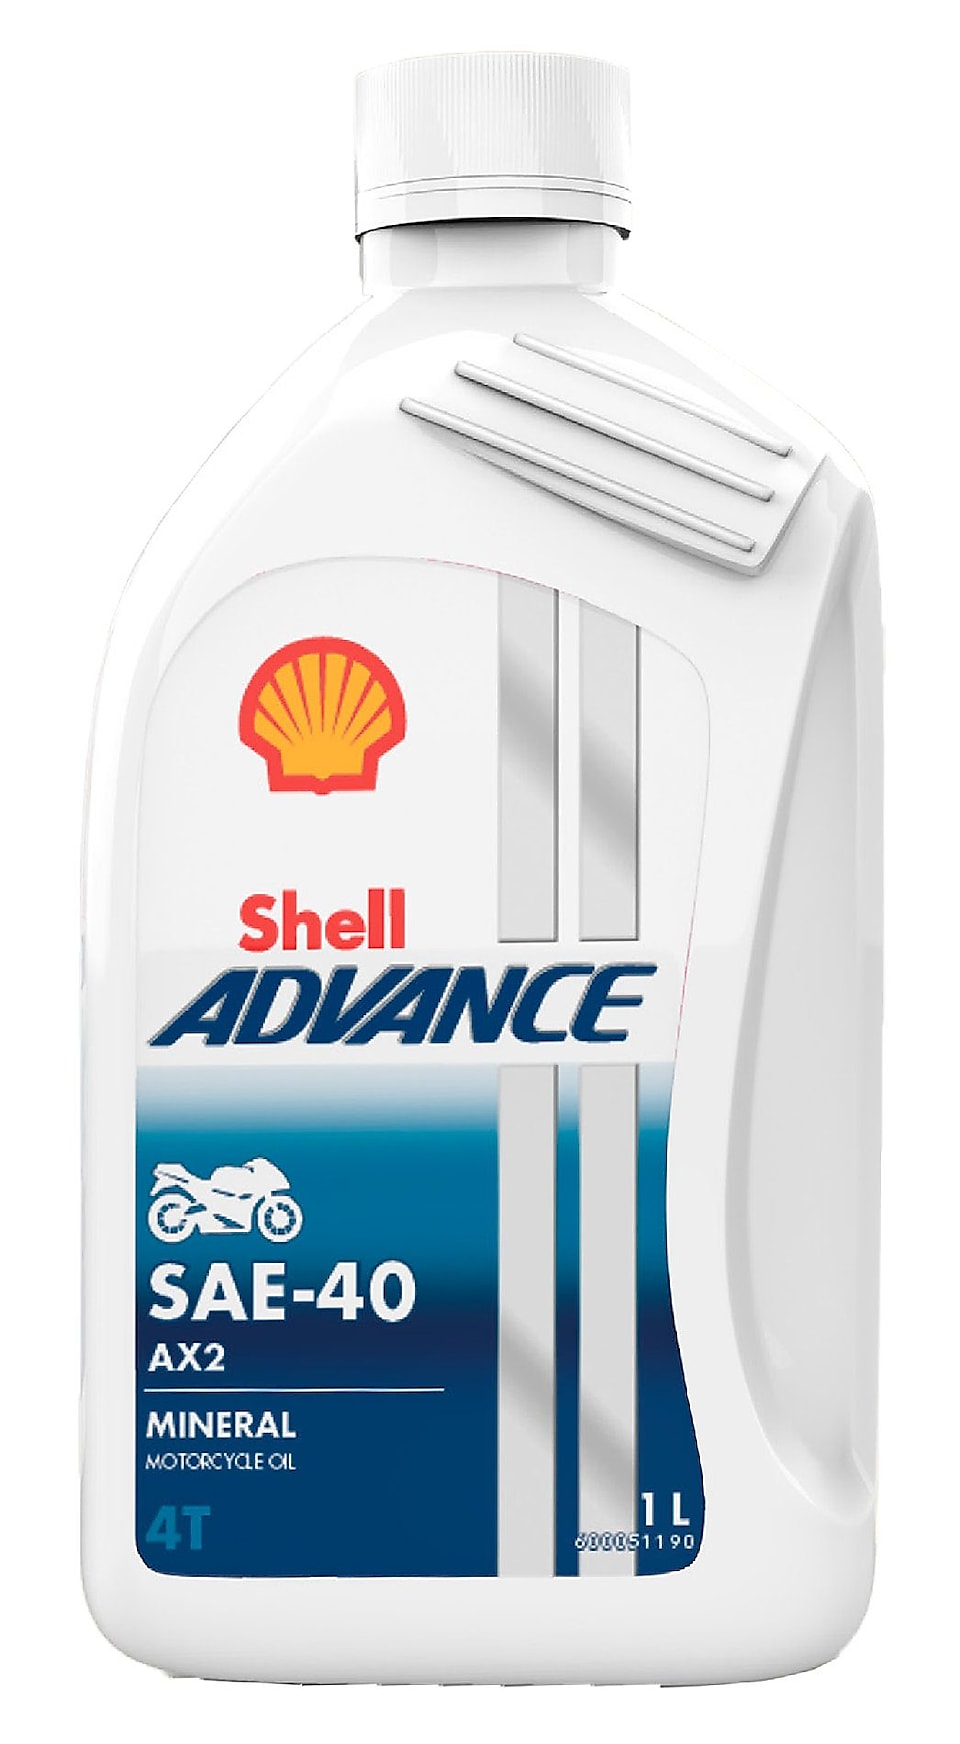 Shell Advance AX2